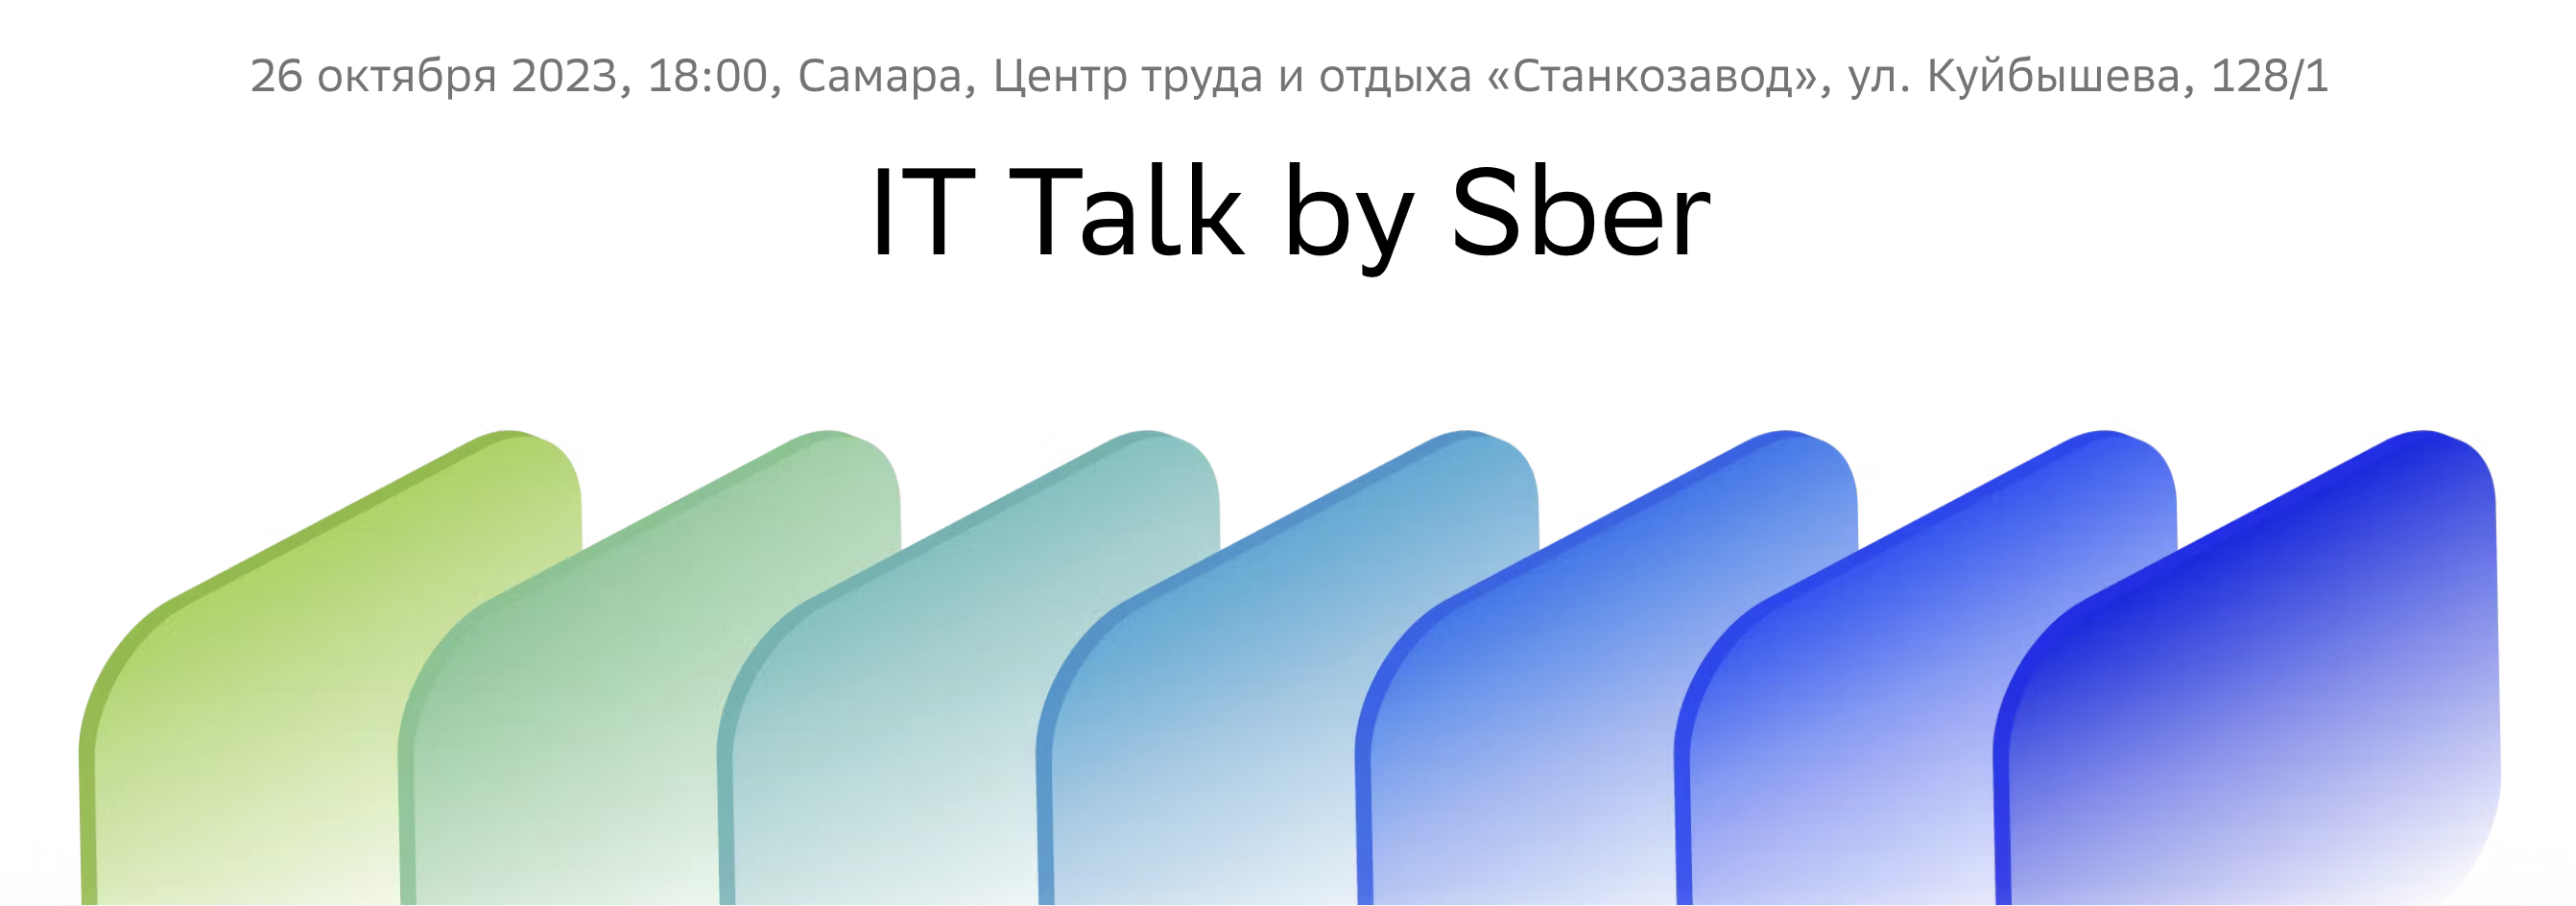 Обложка мероприятия IT Talk by Sber